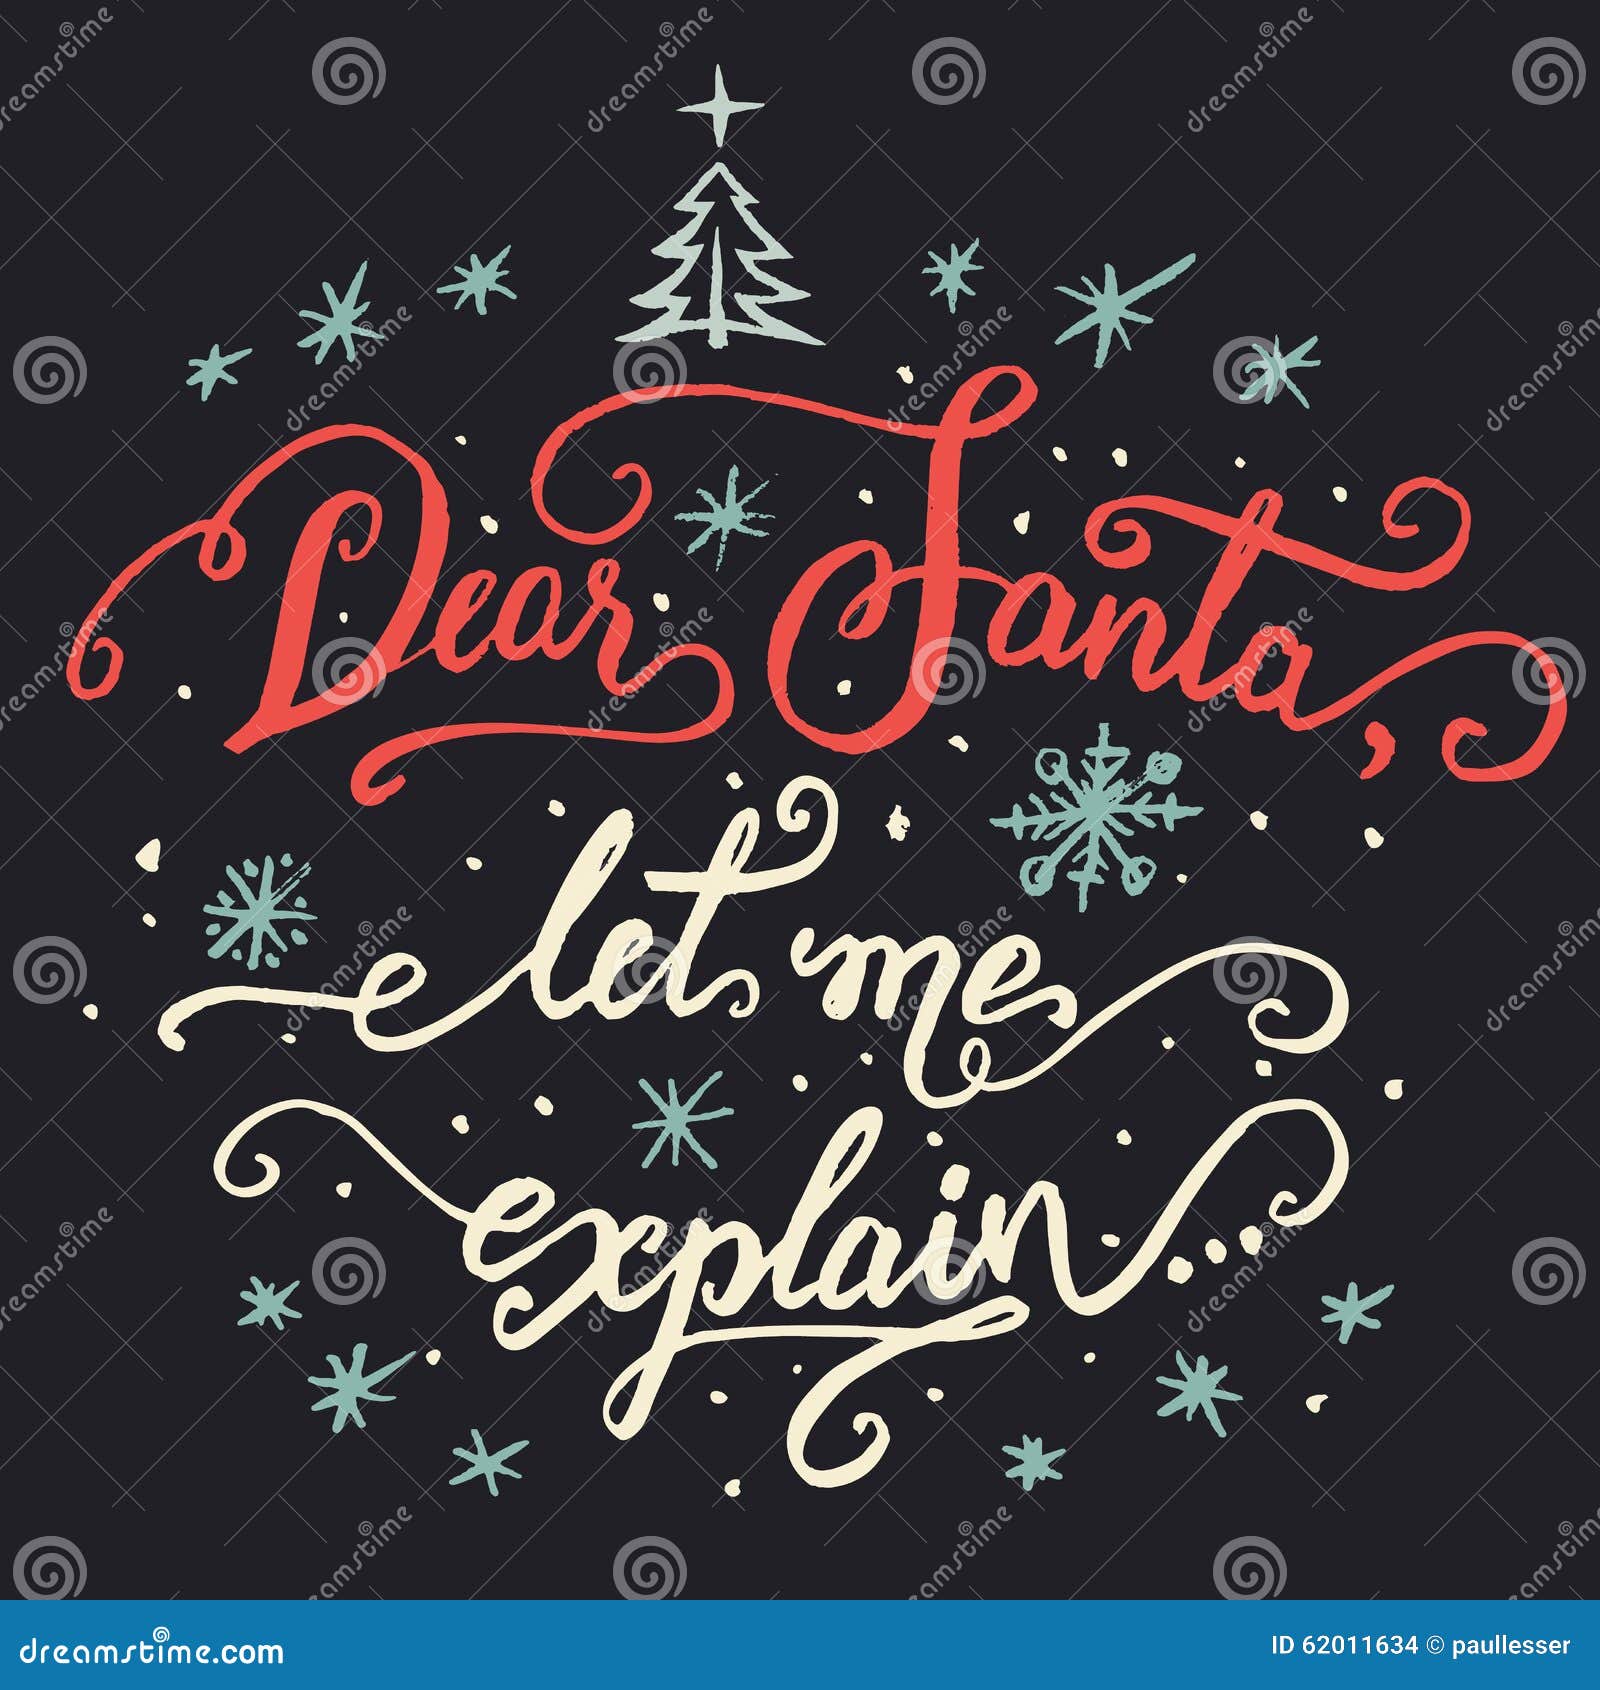 dear santa, let me explain. christmas calligraphy